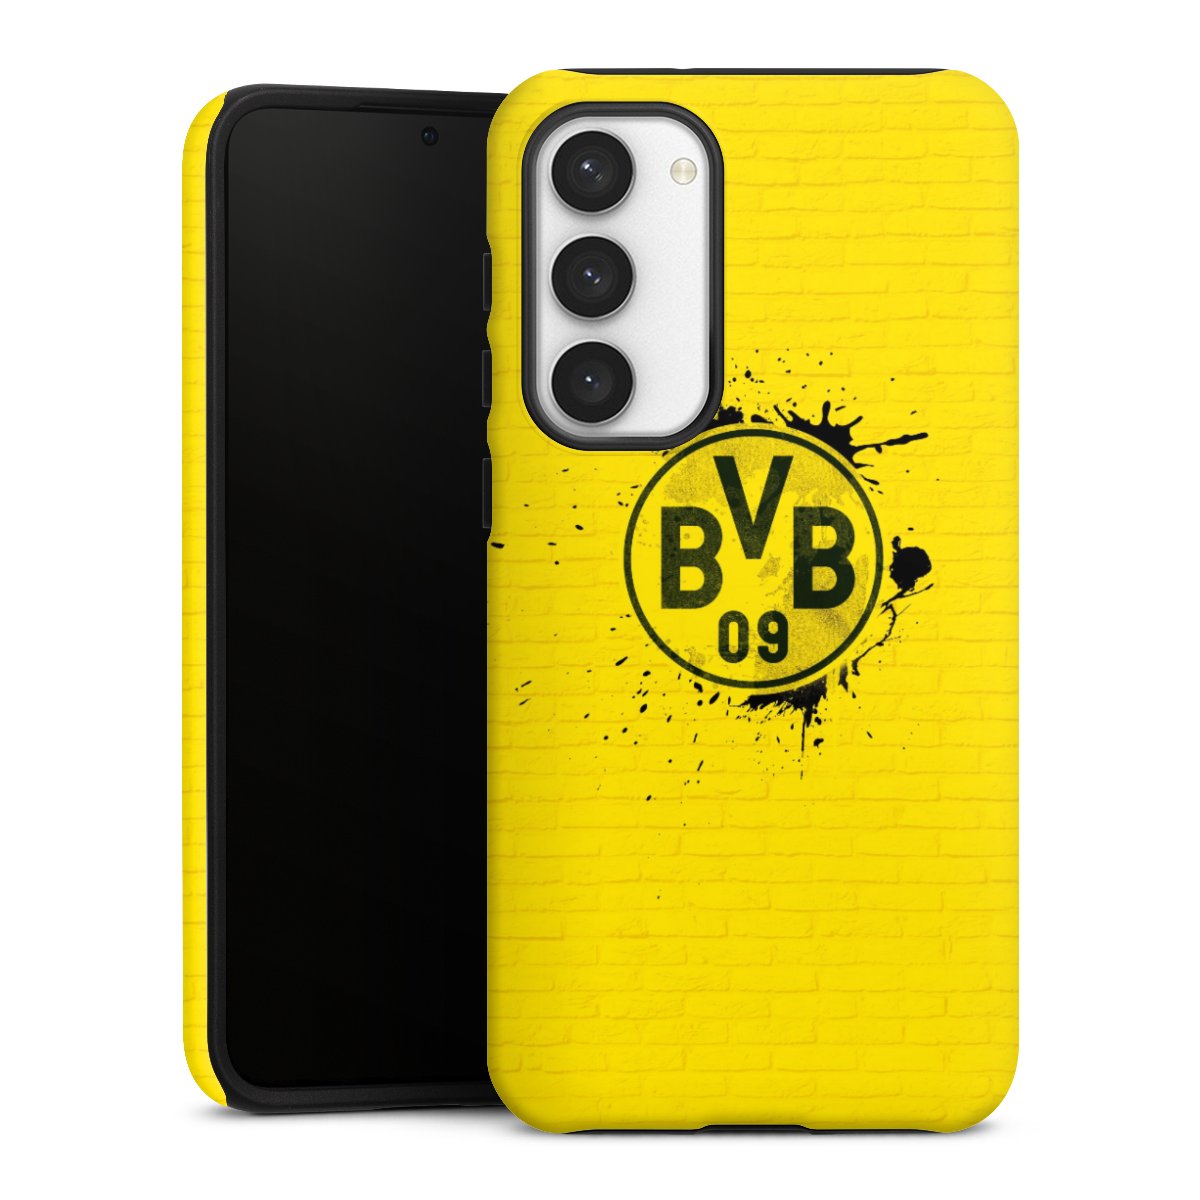 Spraylogo Yellow - BVB